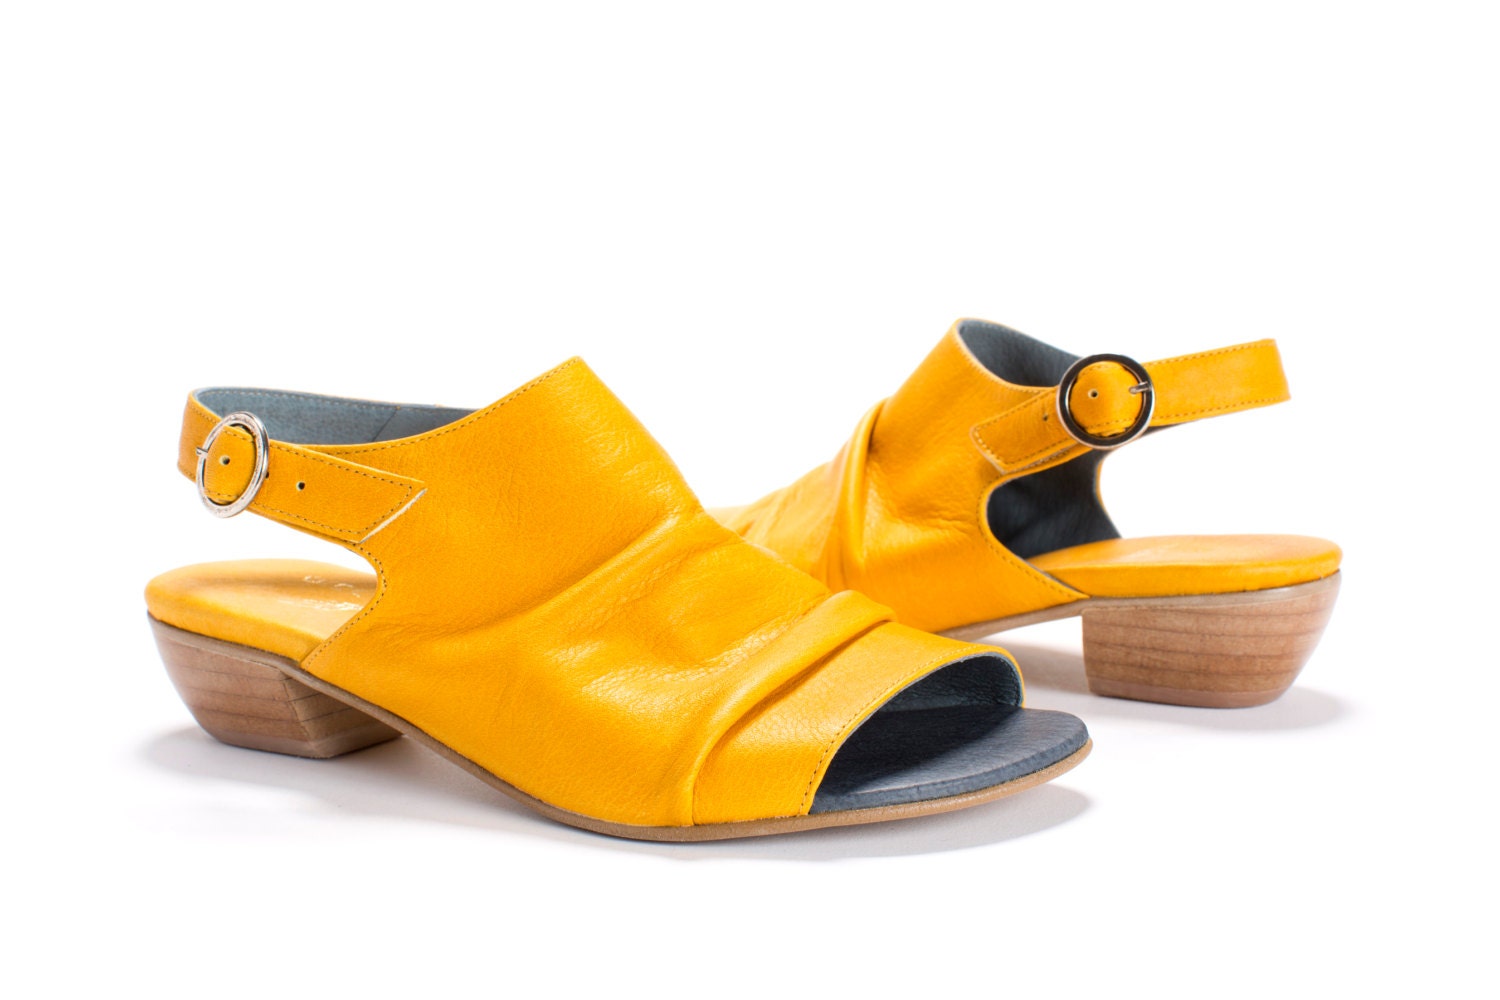 ... Yellow Sandals, Small Heel Shoes, Low Heel Open Toe Summer Sandal